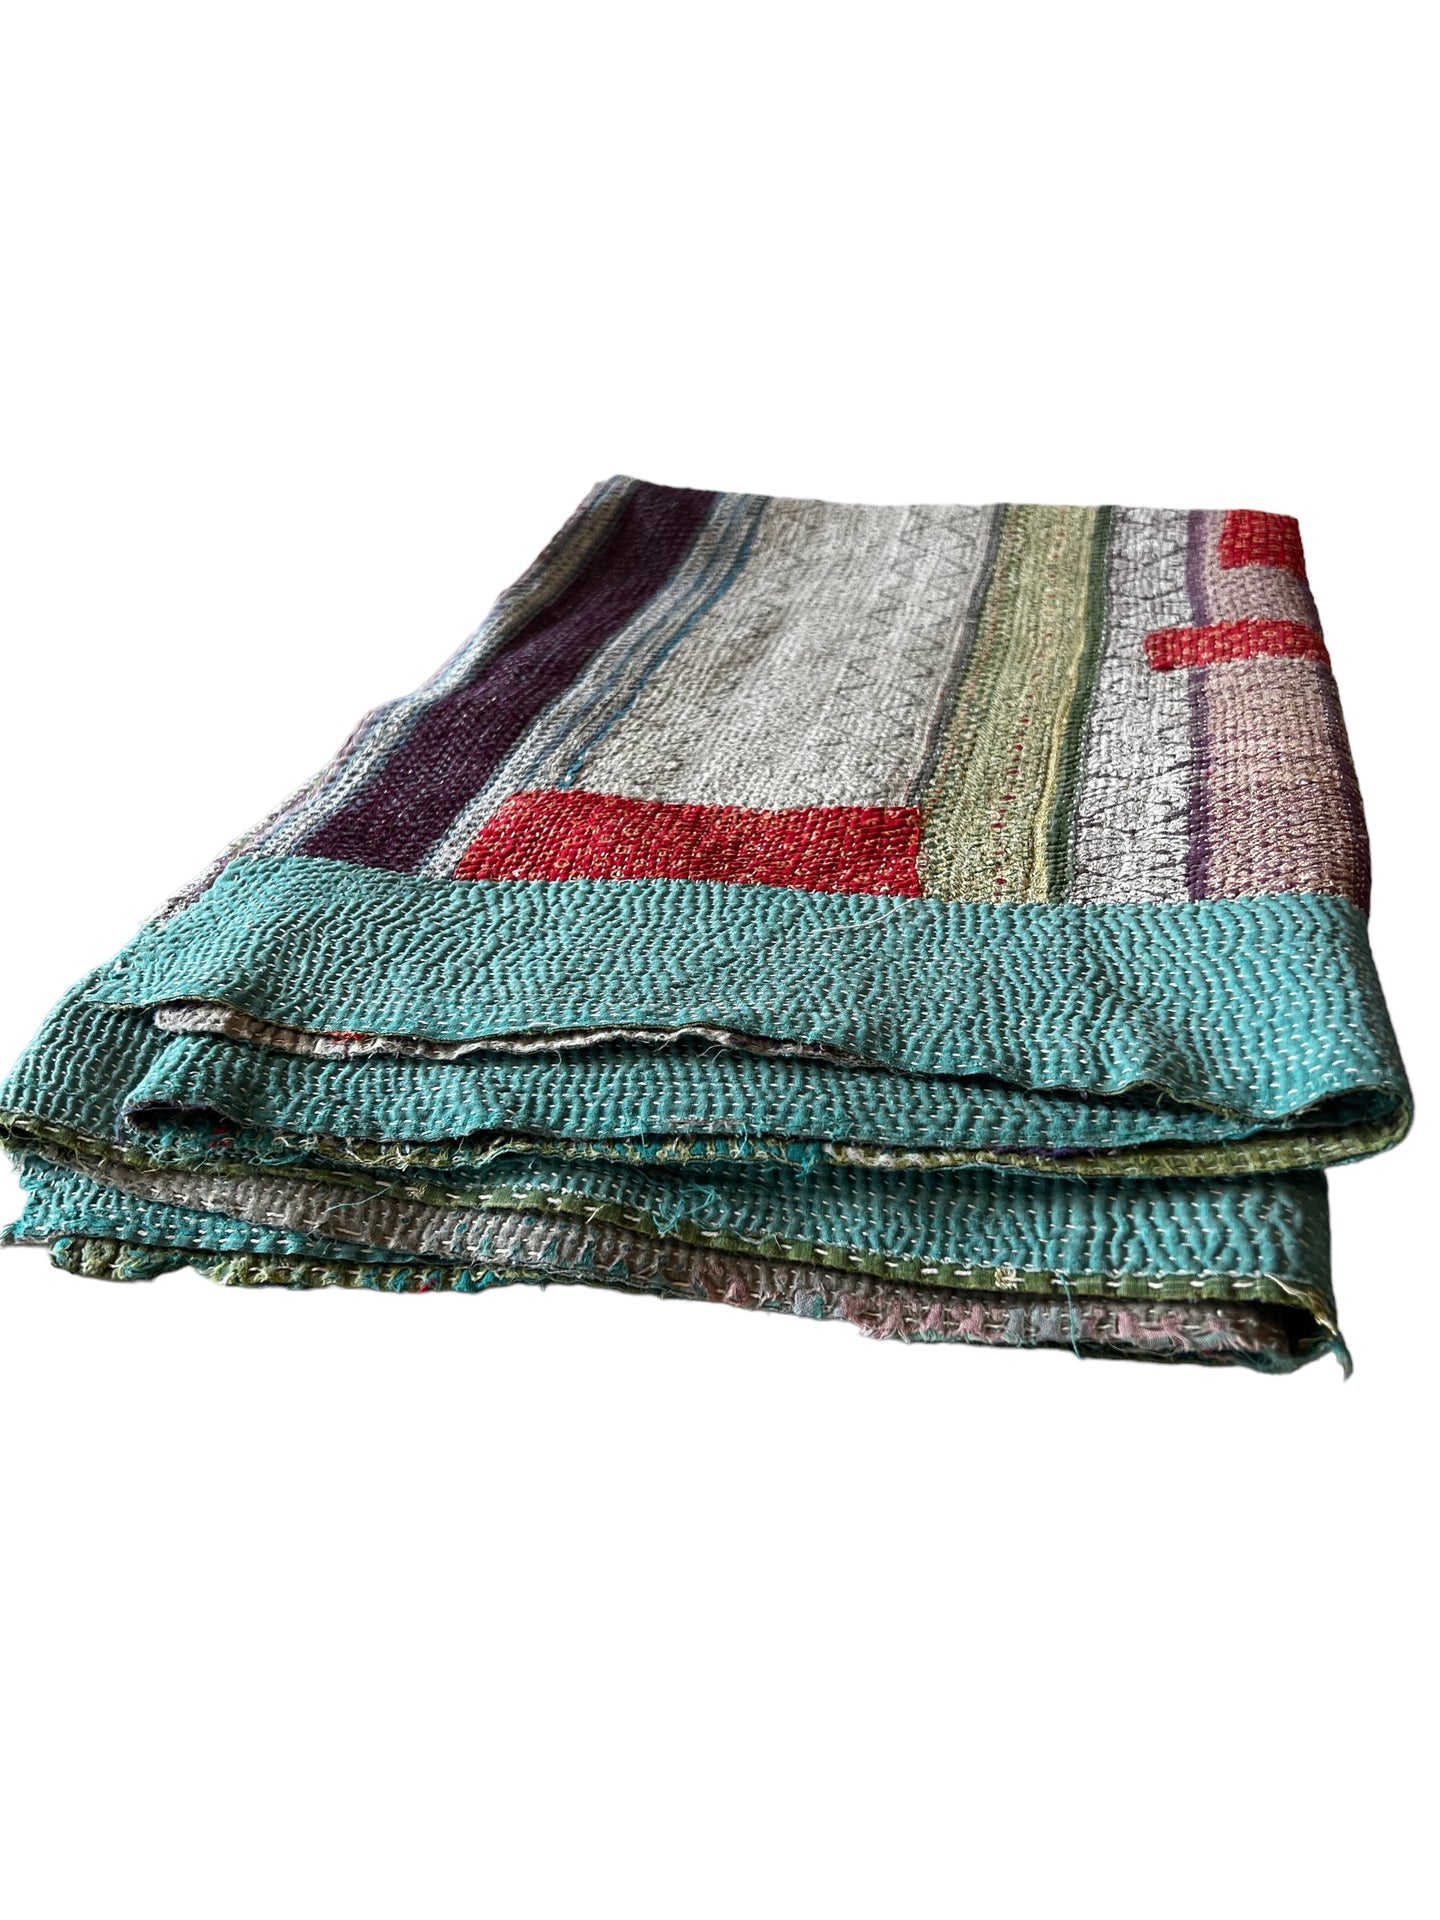 Multi Colored Vintage Quilt